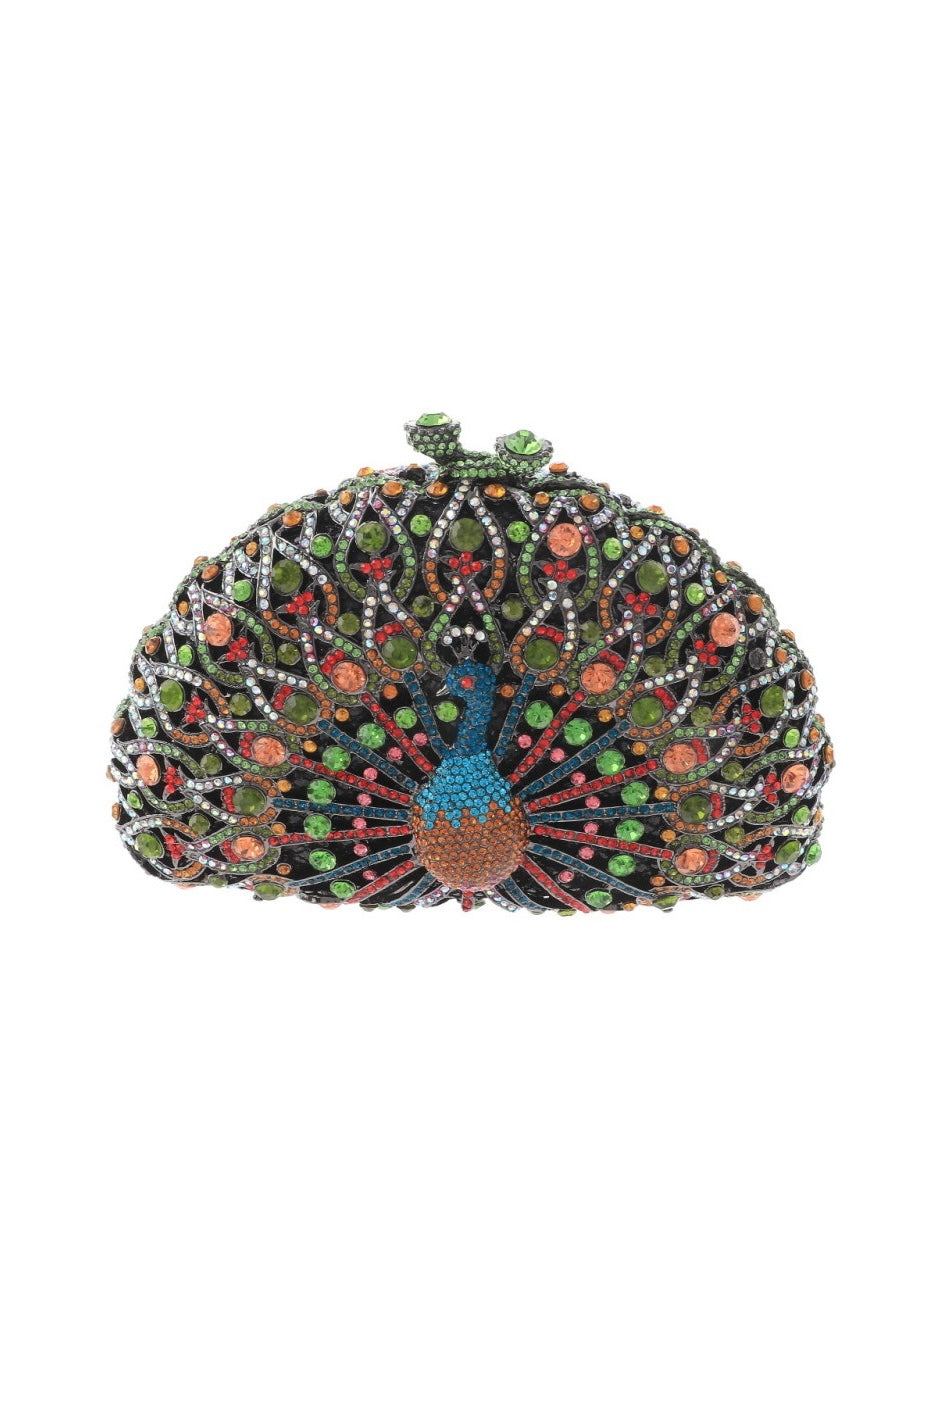 Uretro Crystal Rhinestone Embellished Peacock Evening Clutch